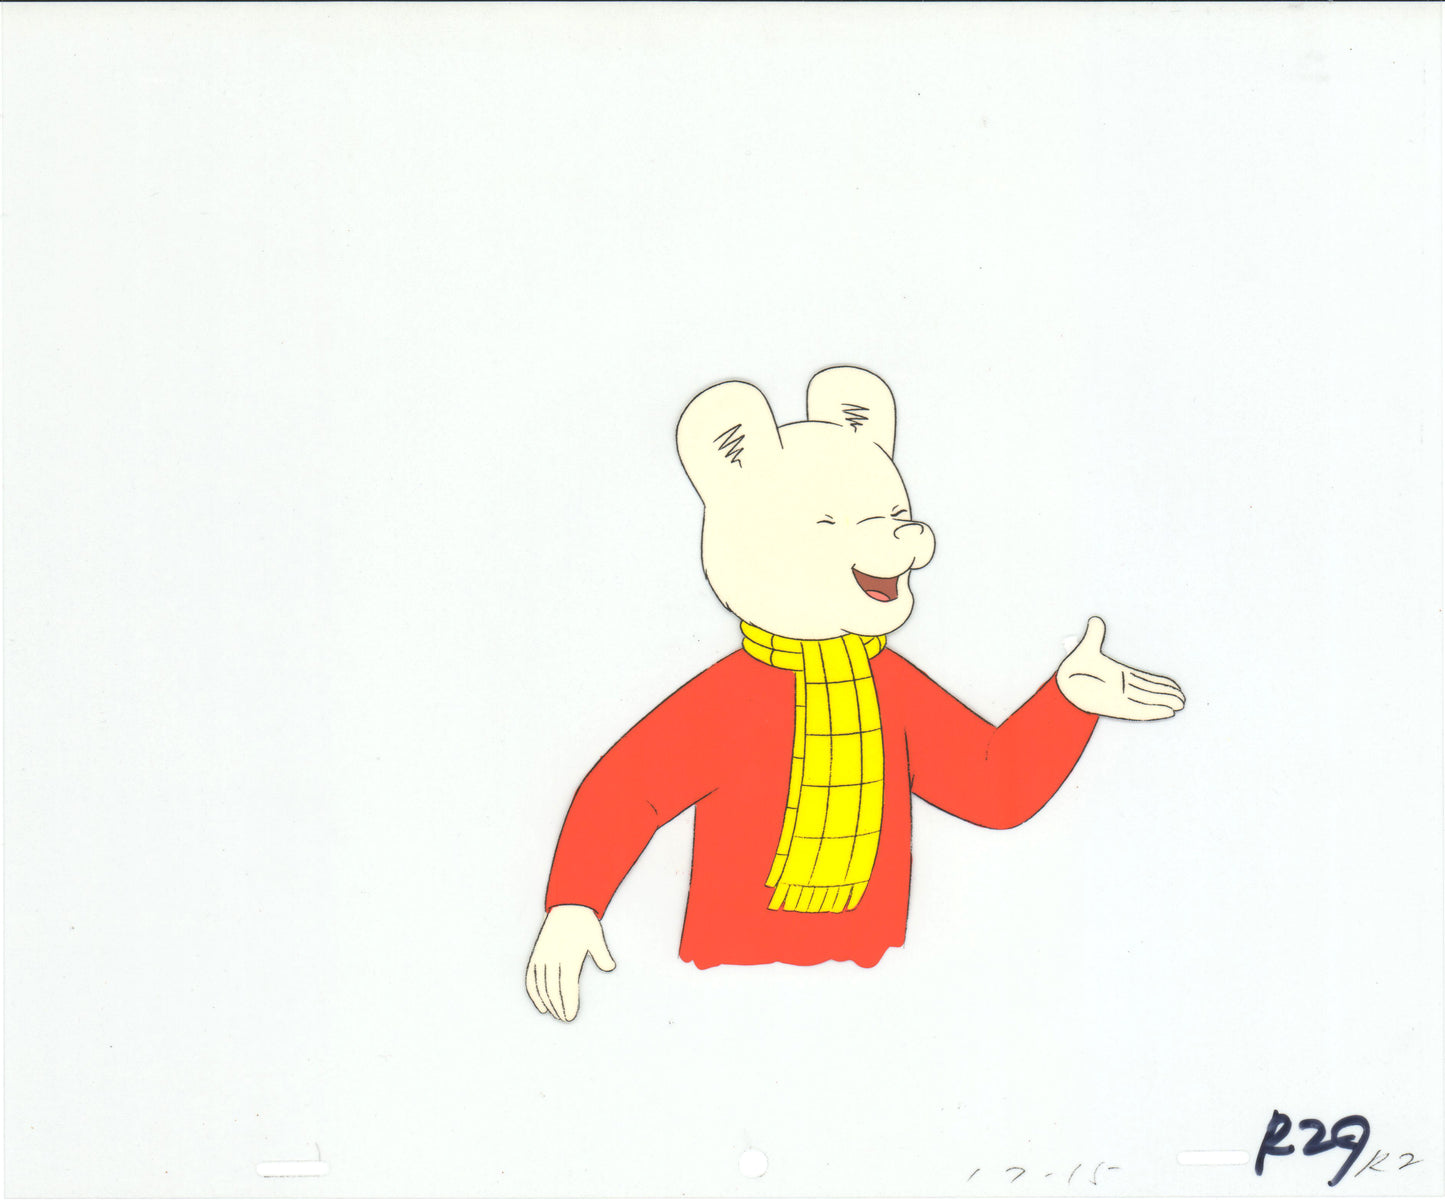 RUPERT Bear Original Production Animation Cel from the Cartoon by Nelvana Tourtel Animation 1990s 8-206